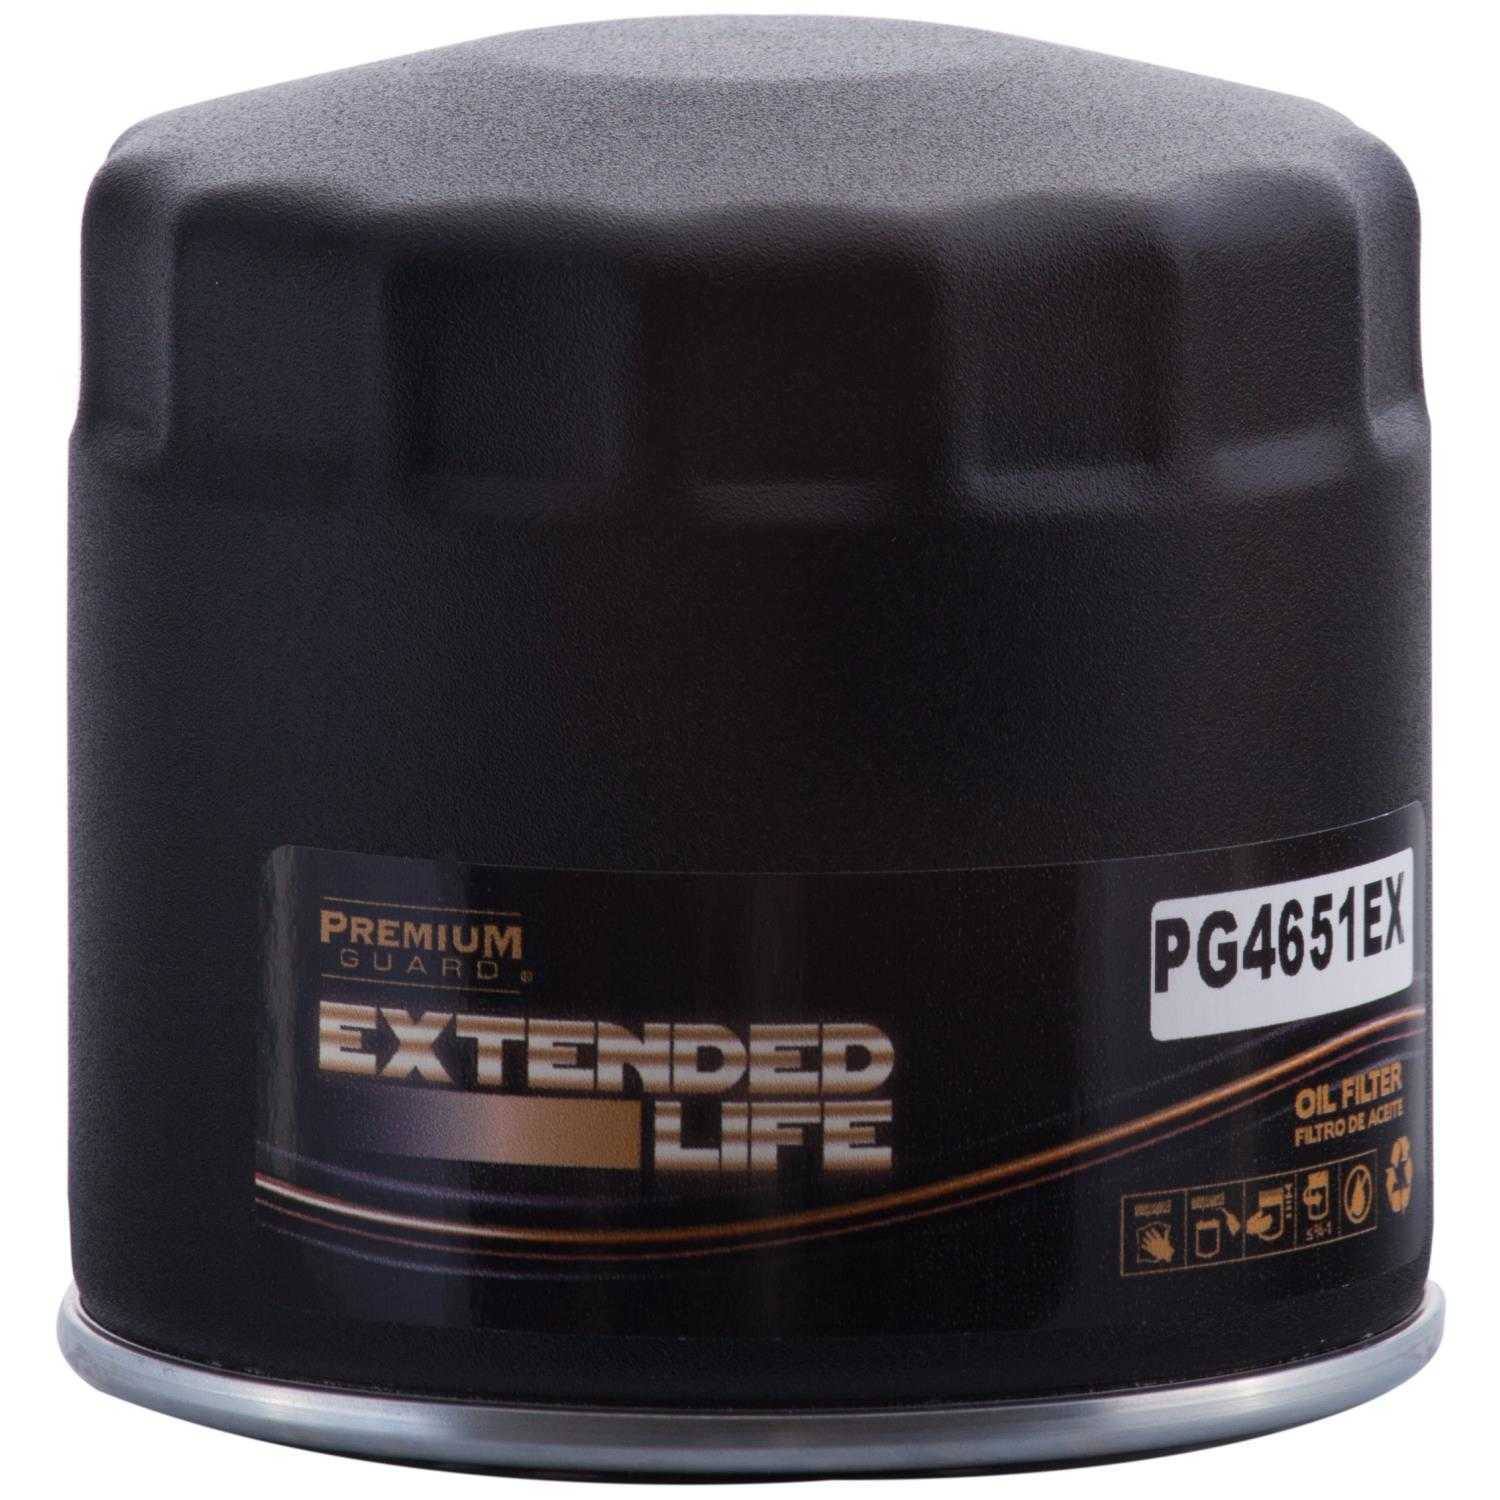 PREMIUM GUARD - Extended Life Oil Filter - PRG PG4651EX